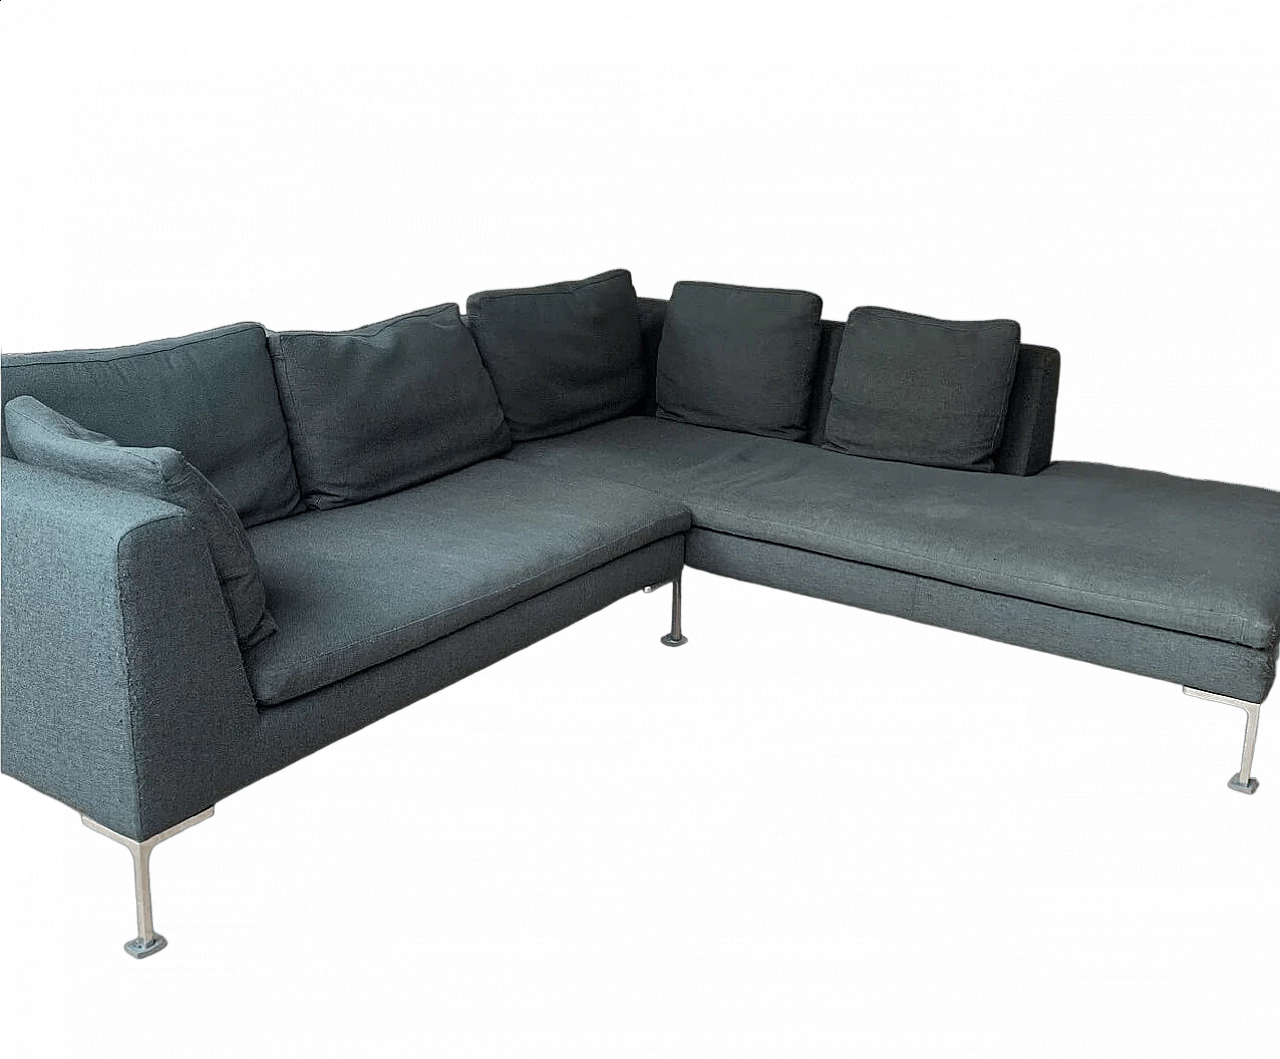 Cobalt gray Charles sofa by Antonio Citterio for B&B 9